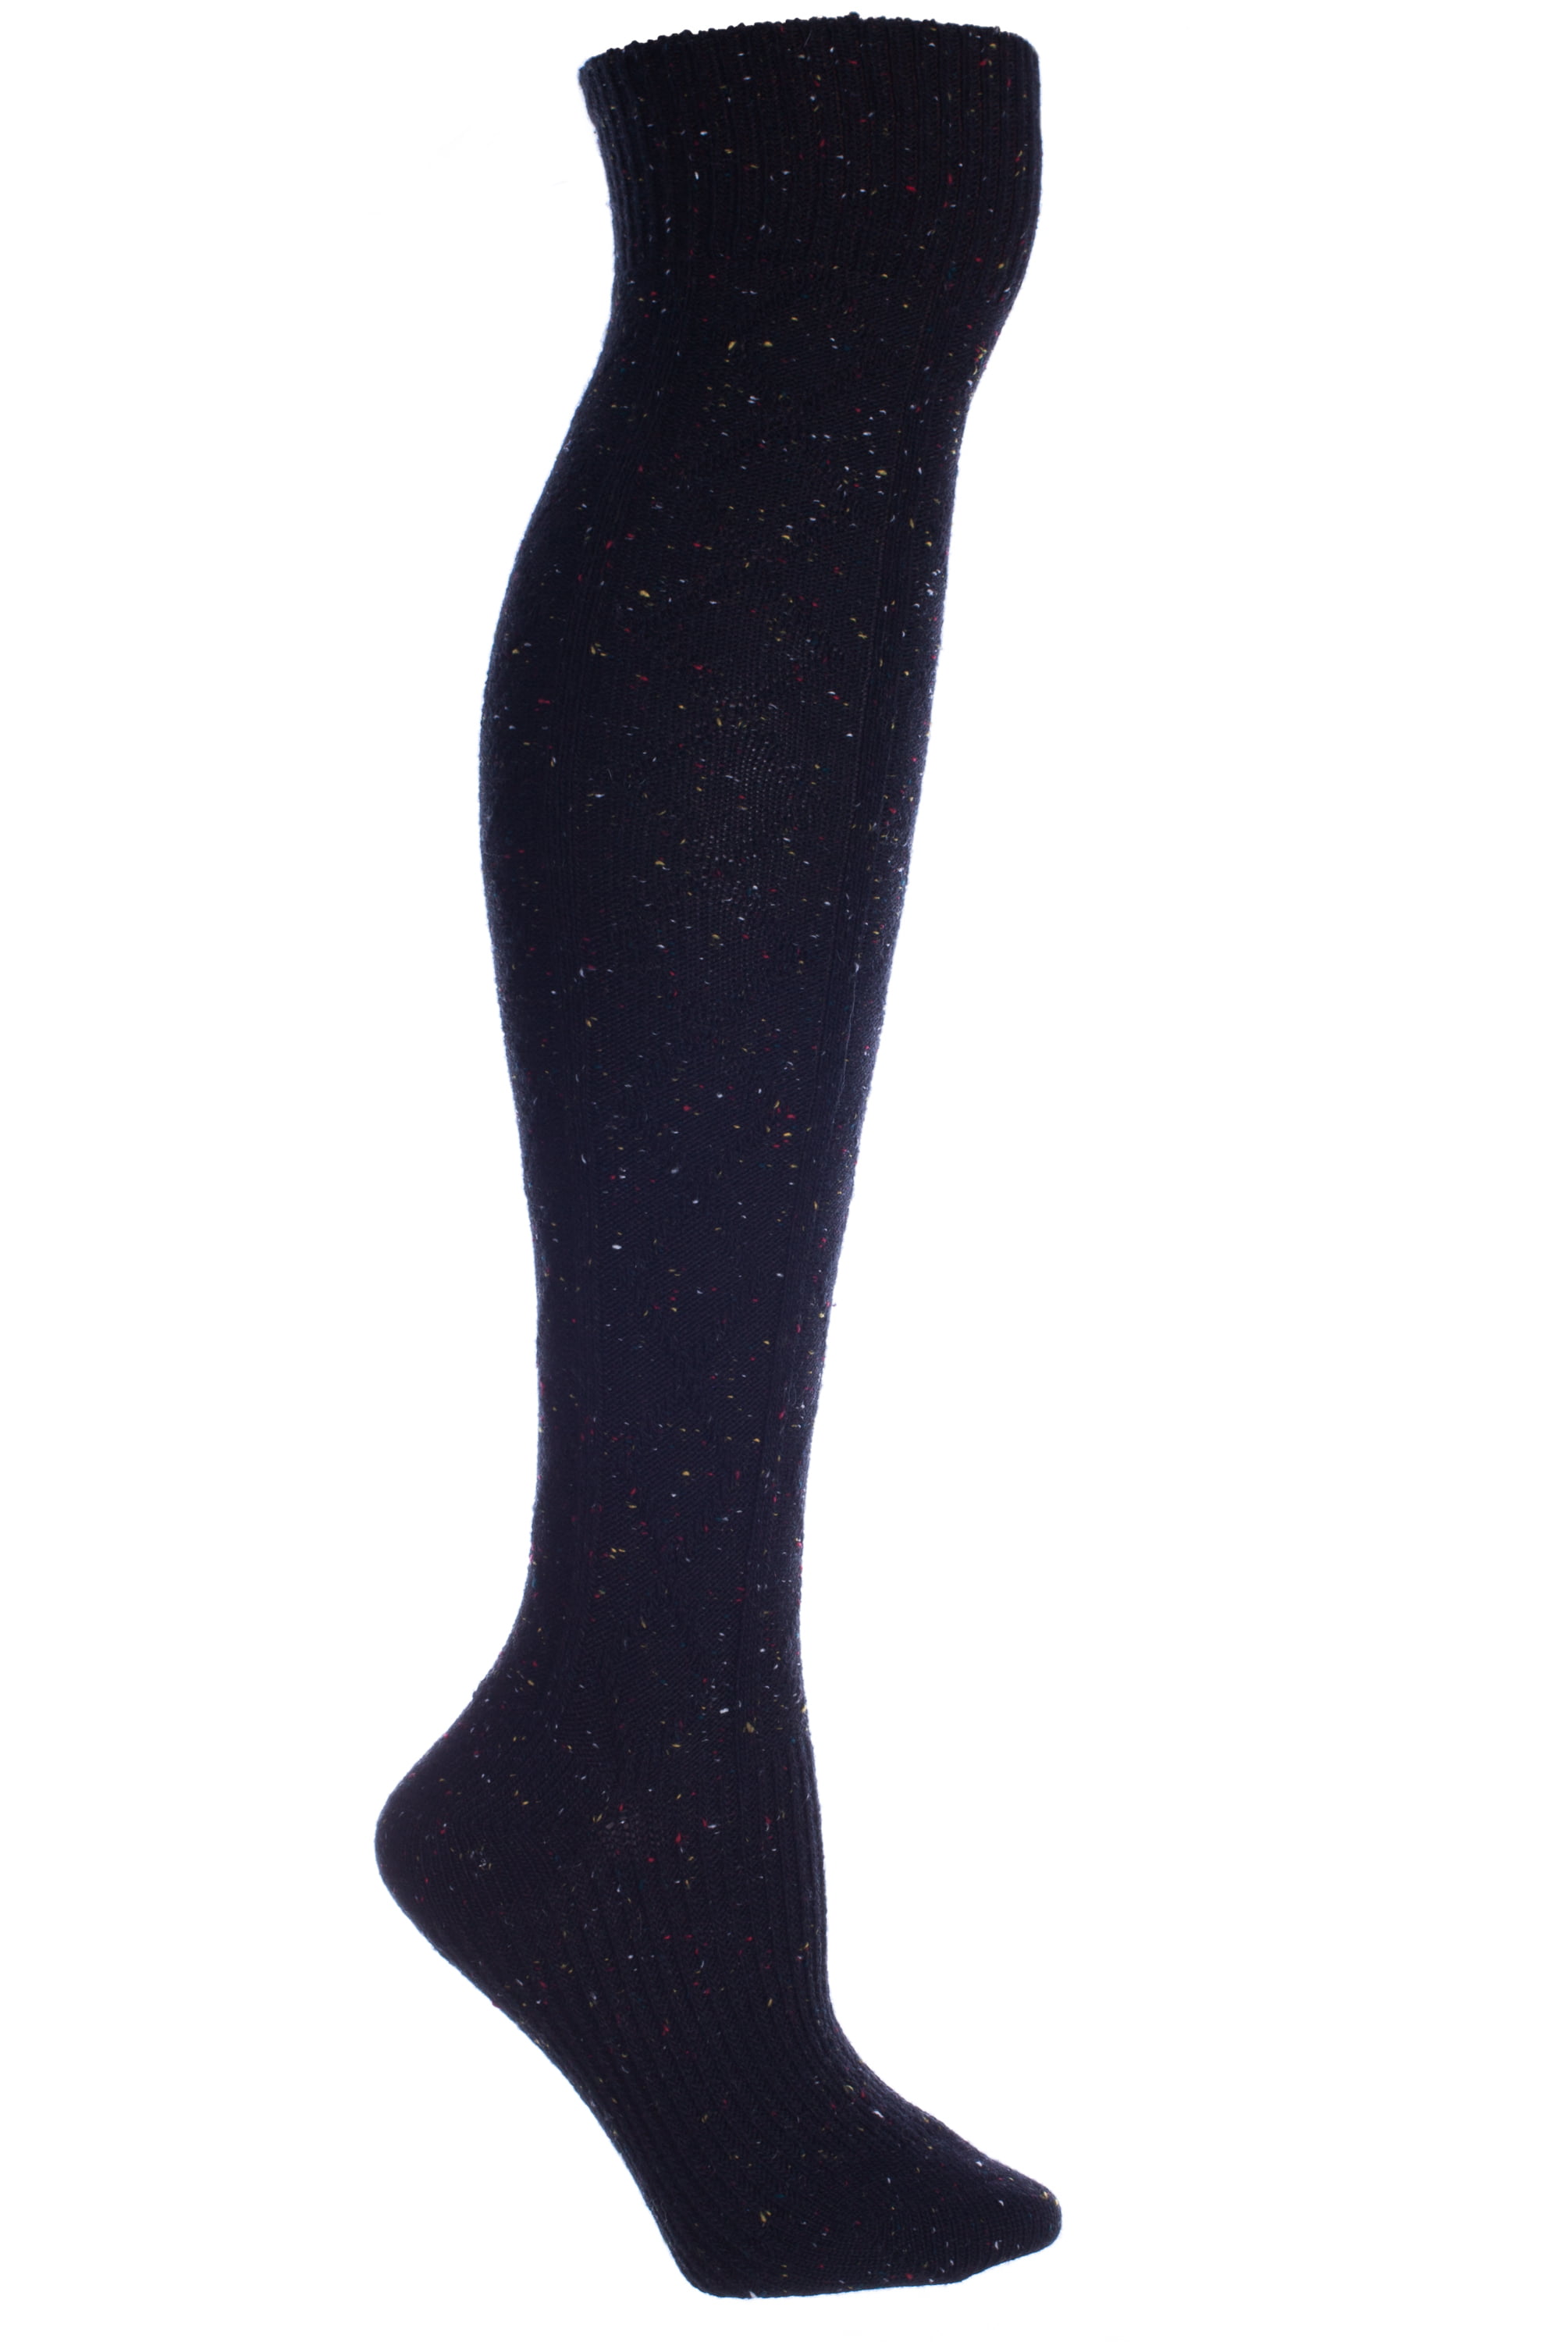 Black Wool Speckled Knee High Boot Socks - Walmart.com